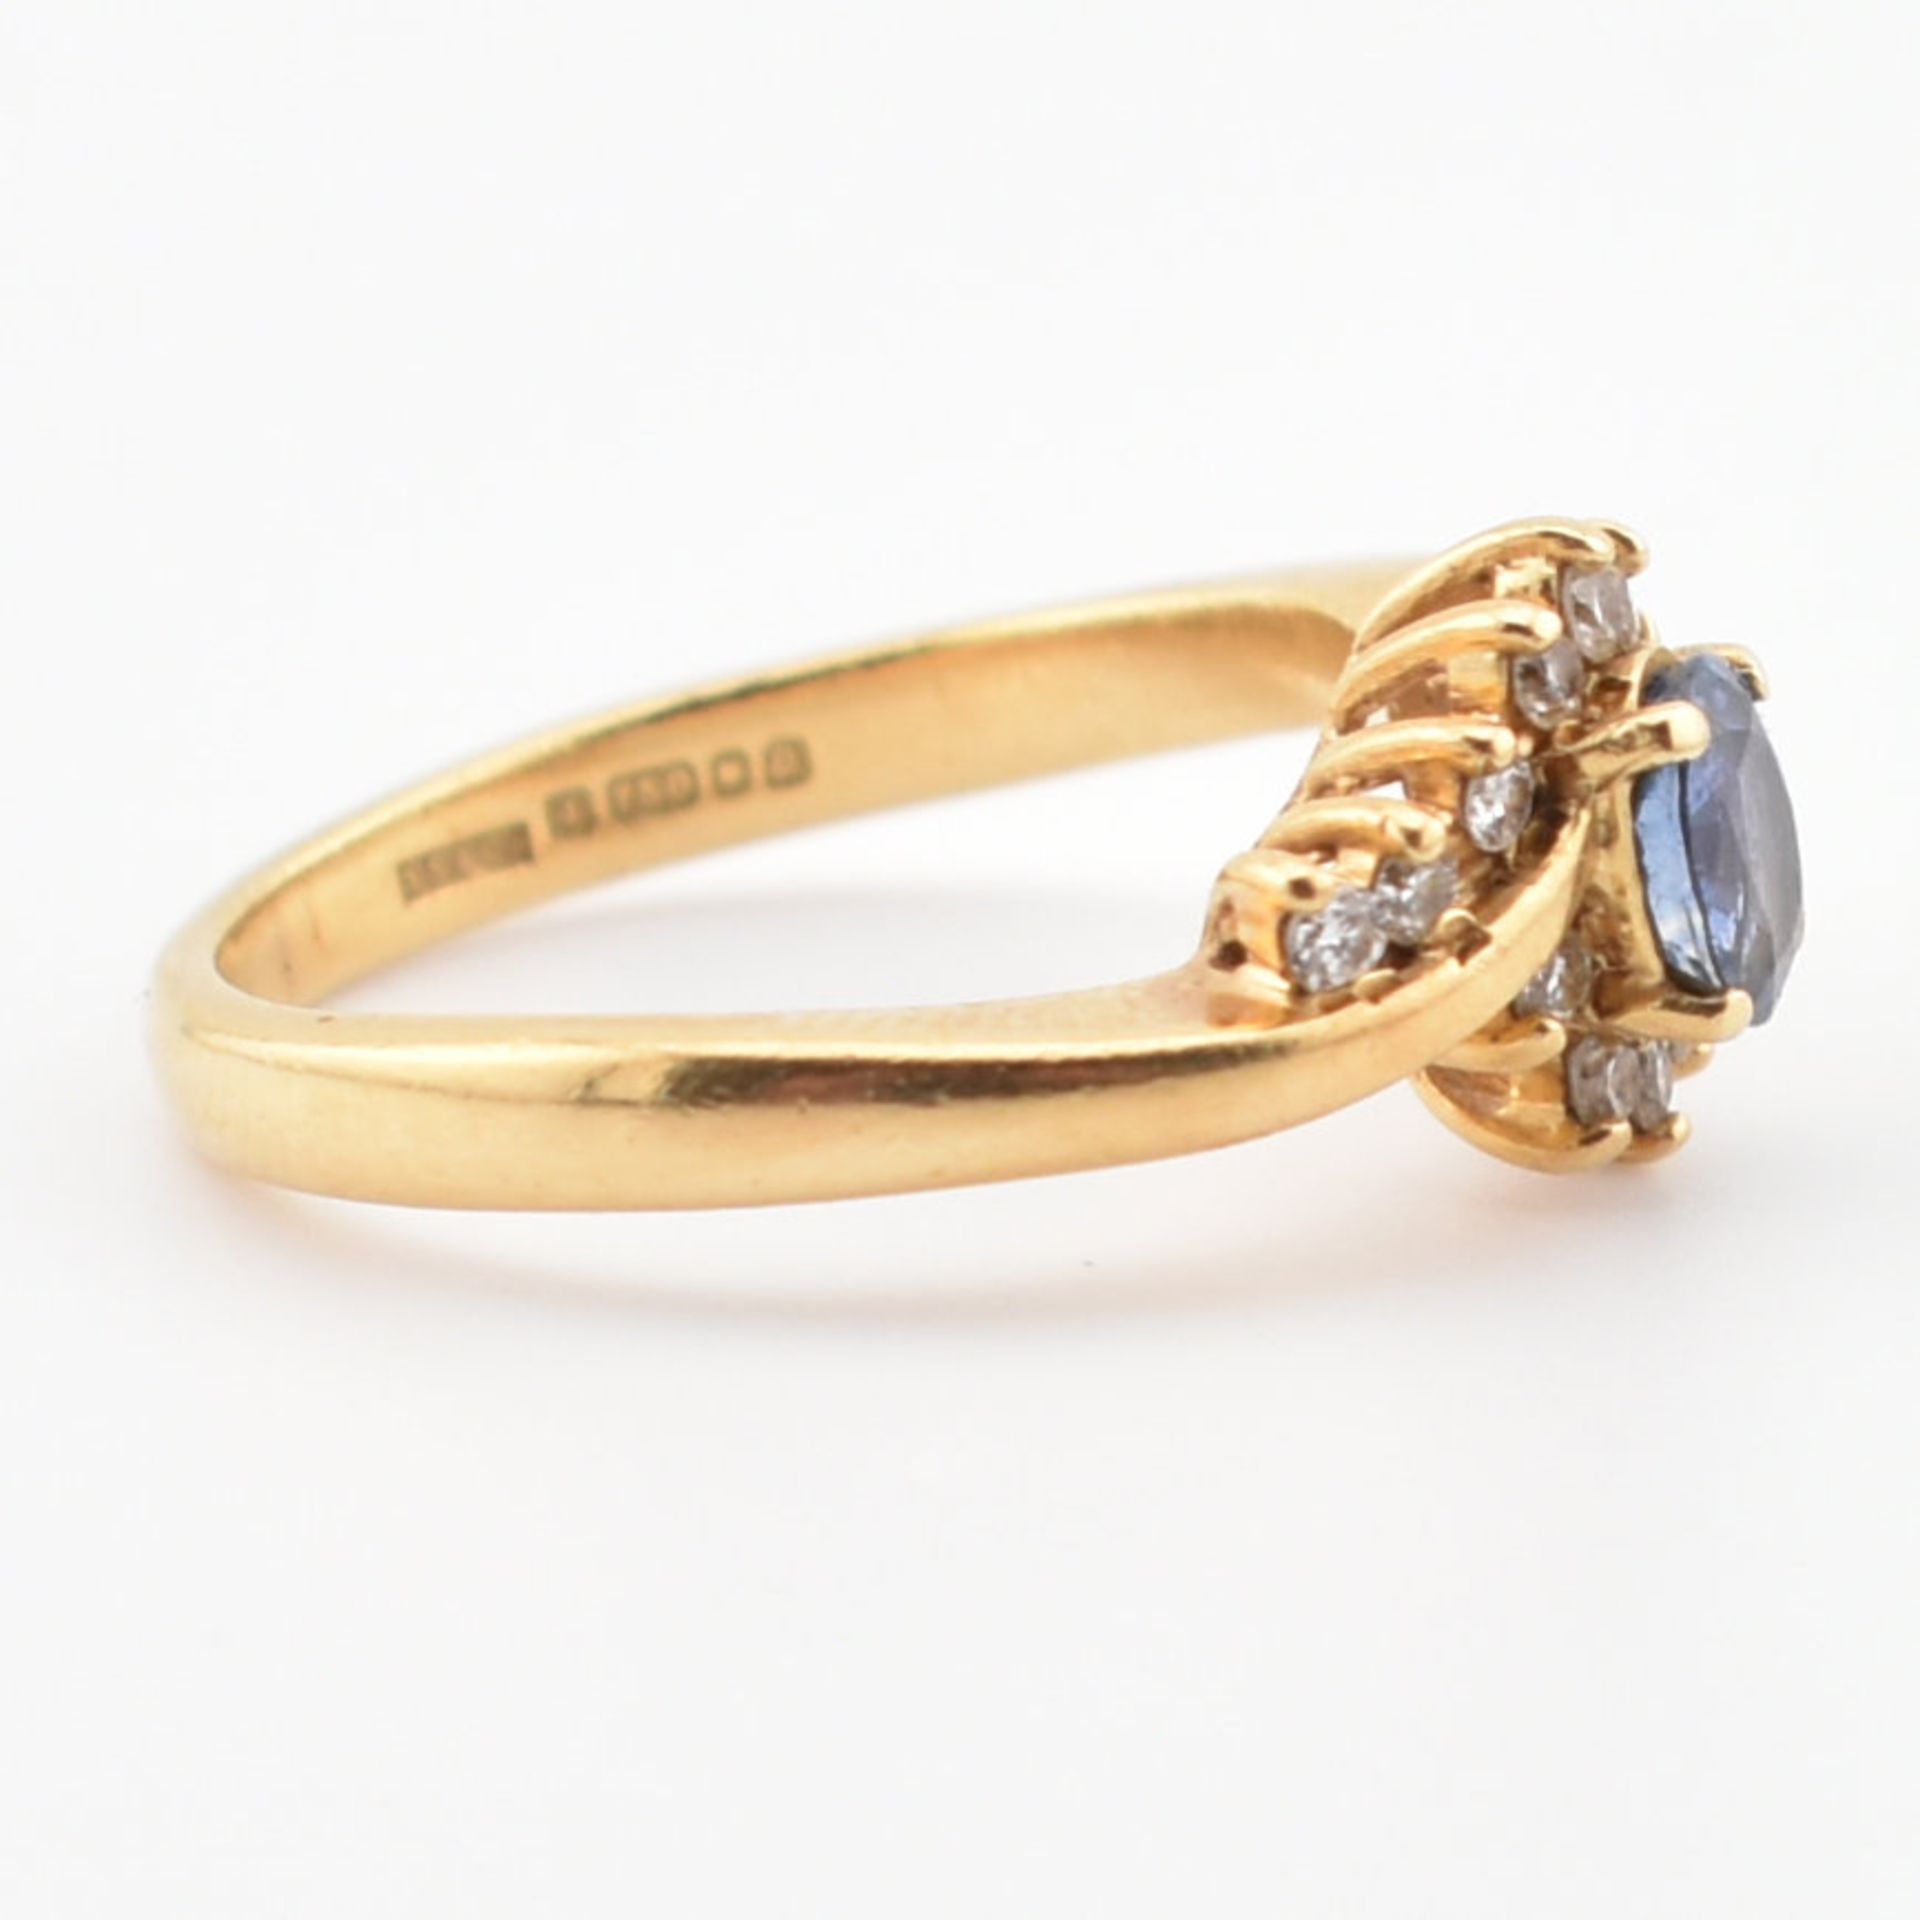 HALLMARKED 18CT GOLD CEYLON SAPPHIRE & DIAMOND RING - Image 3 of 8